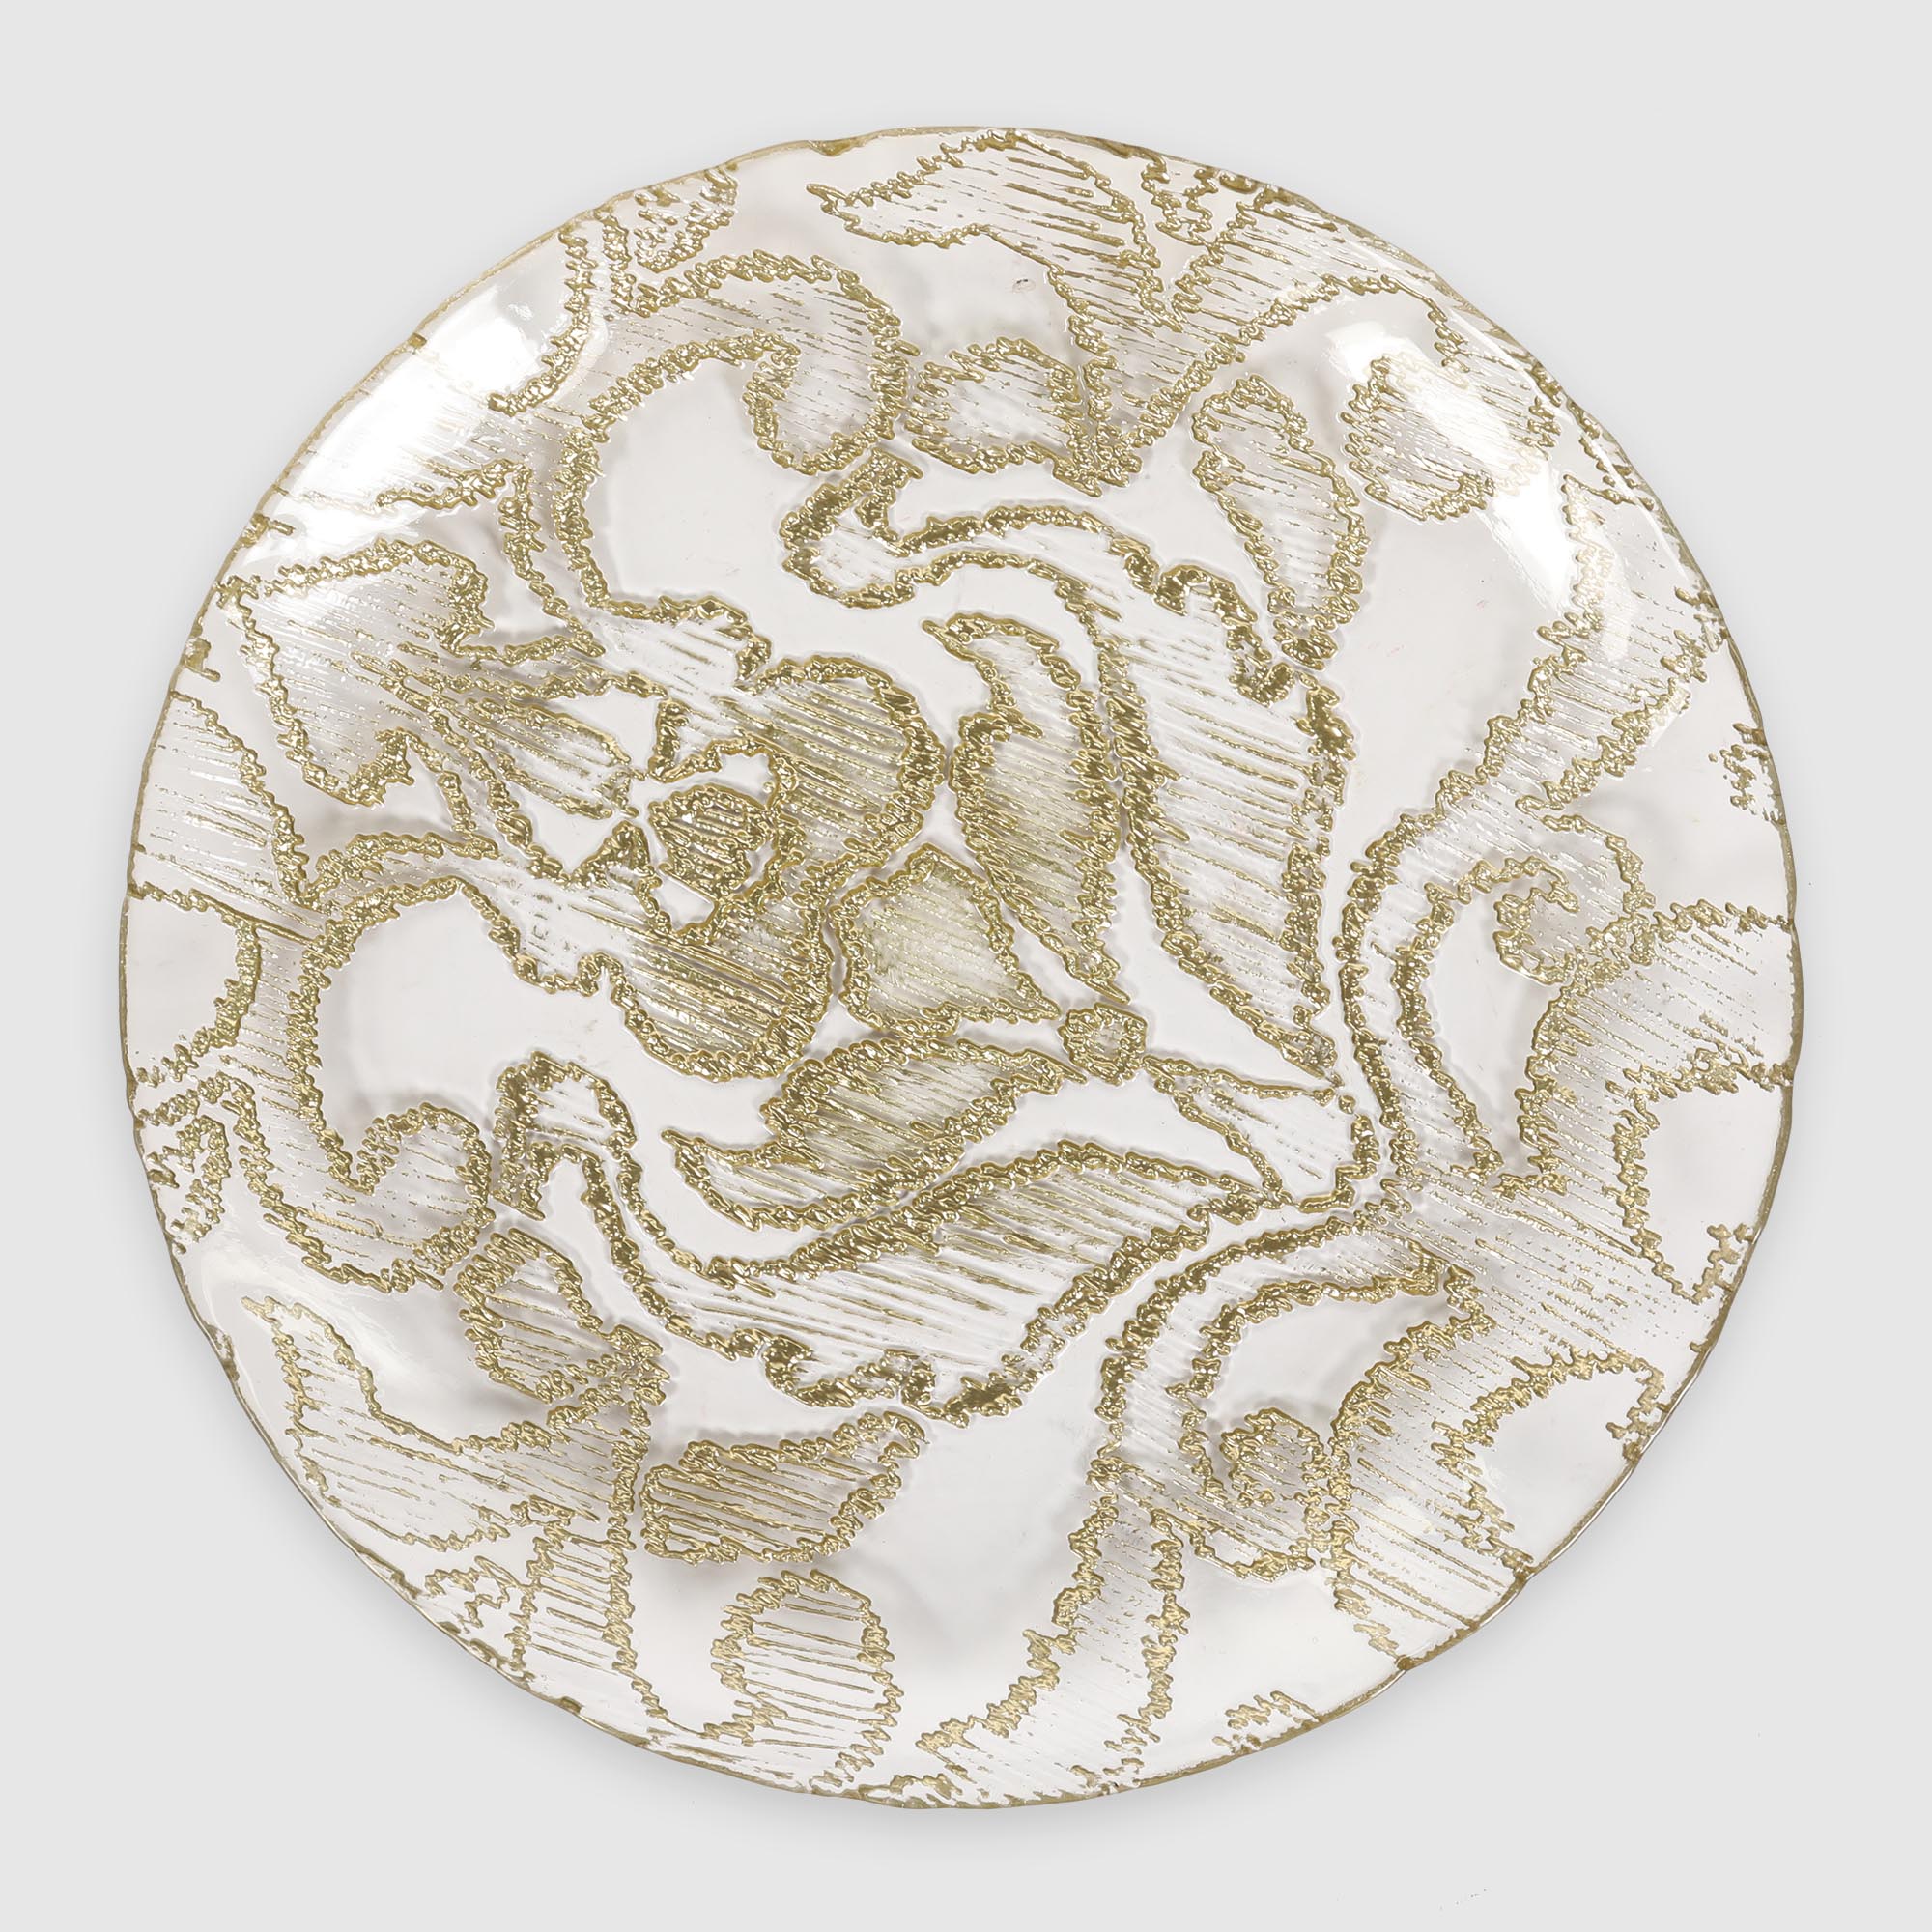 Тарелка Mercury Tableware Firenze золото 21 см тарелка ivv folies круглая 28 см желтое золото